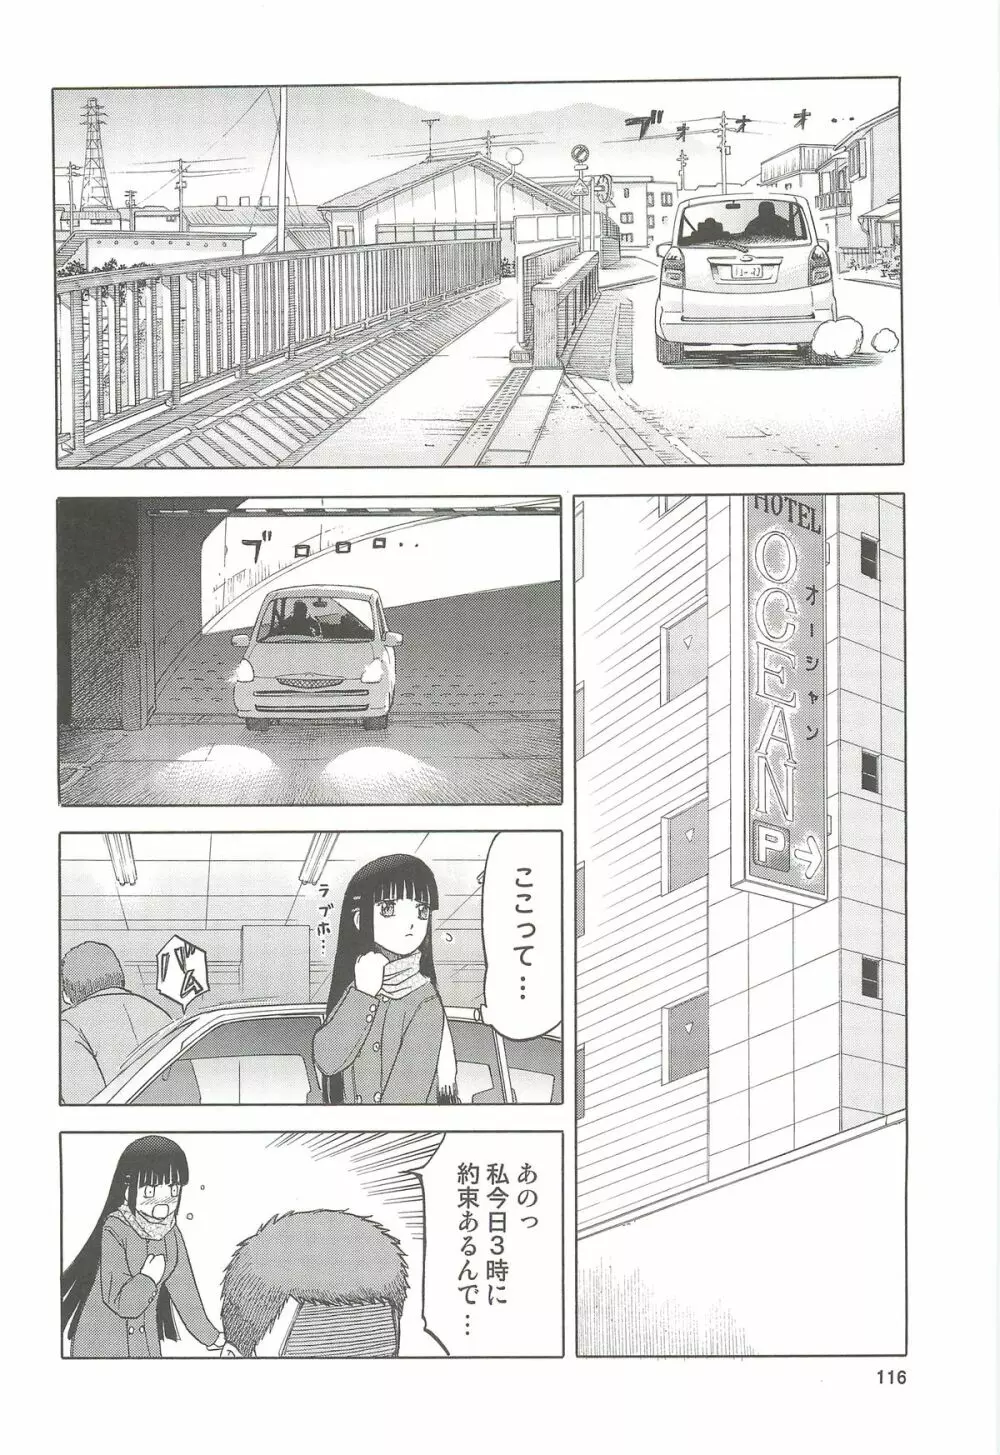 blue snow blue 総集編4 scene.10～scene.12 - page117